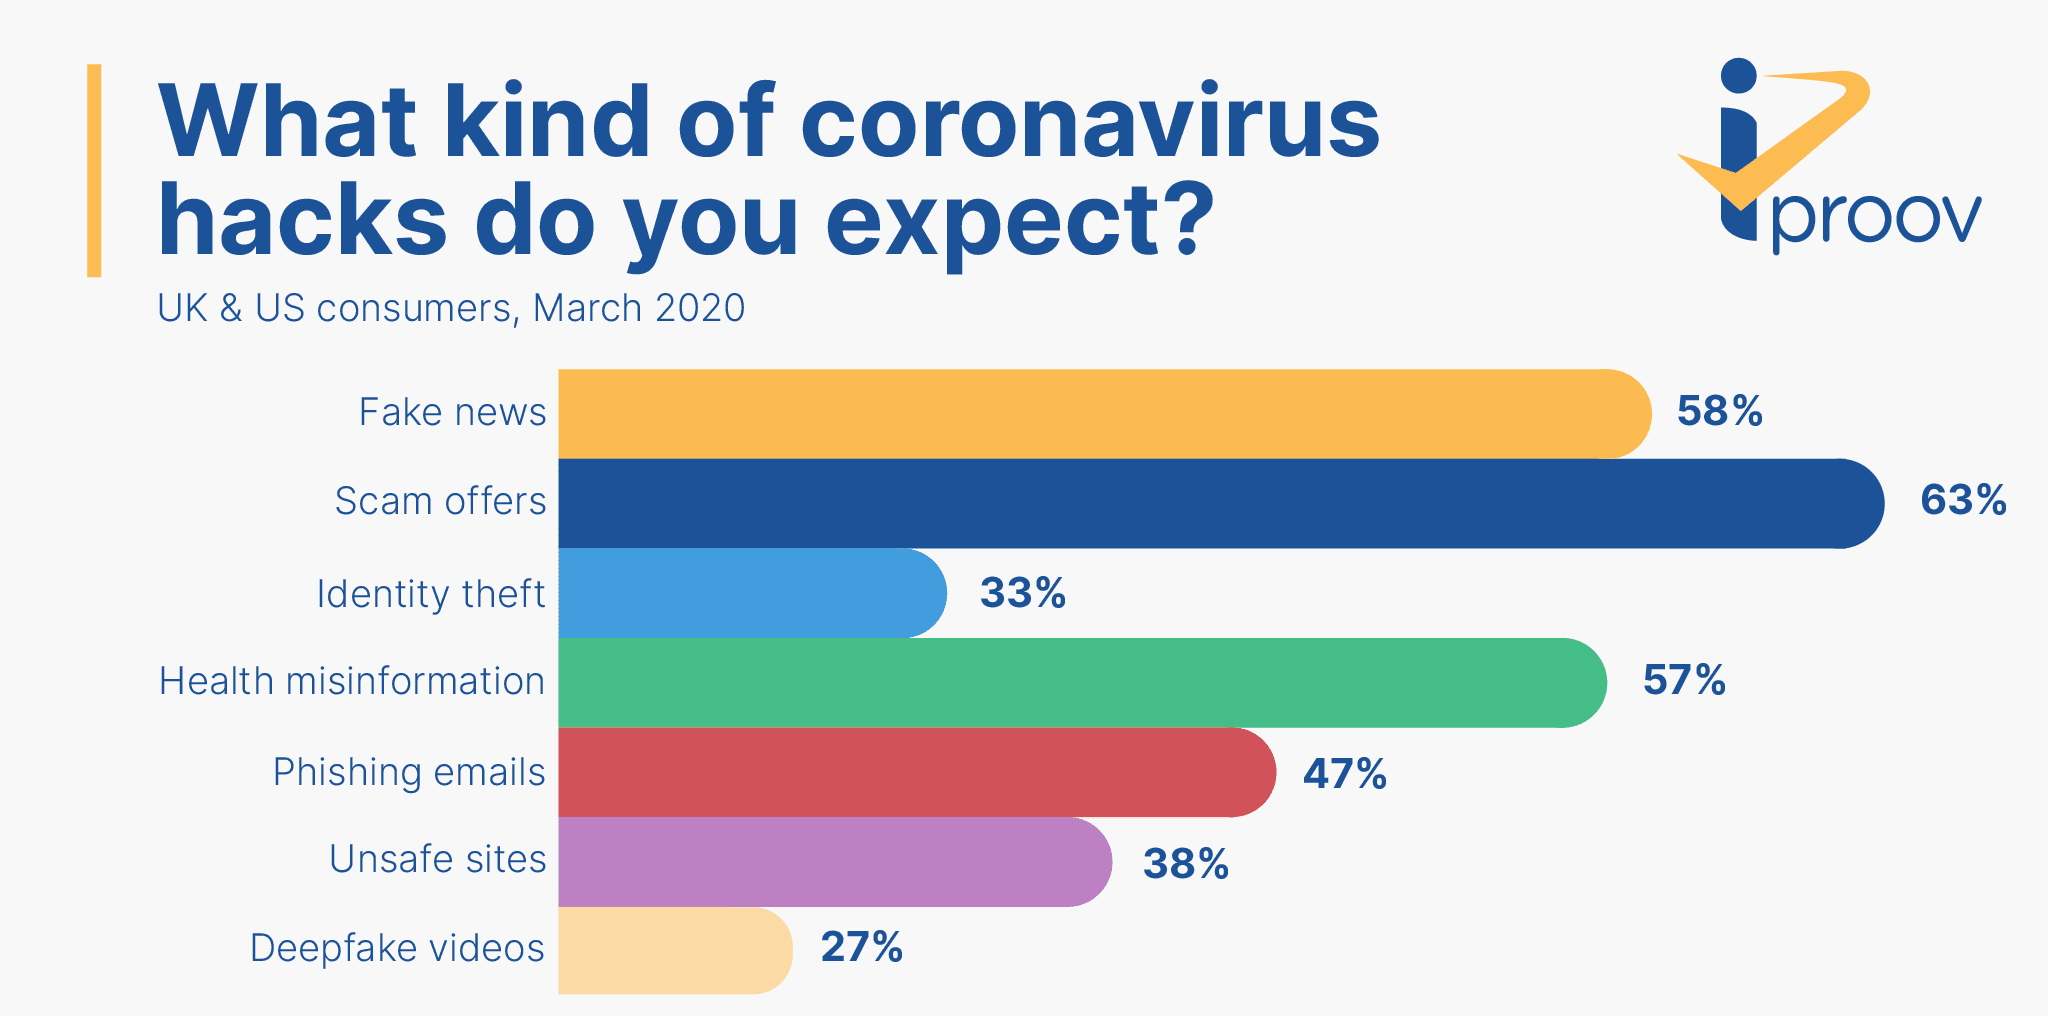 more types of hacks during coronavirus pandemic